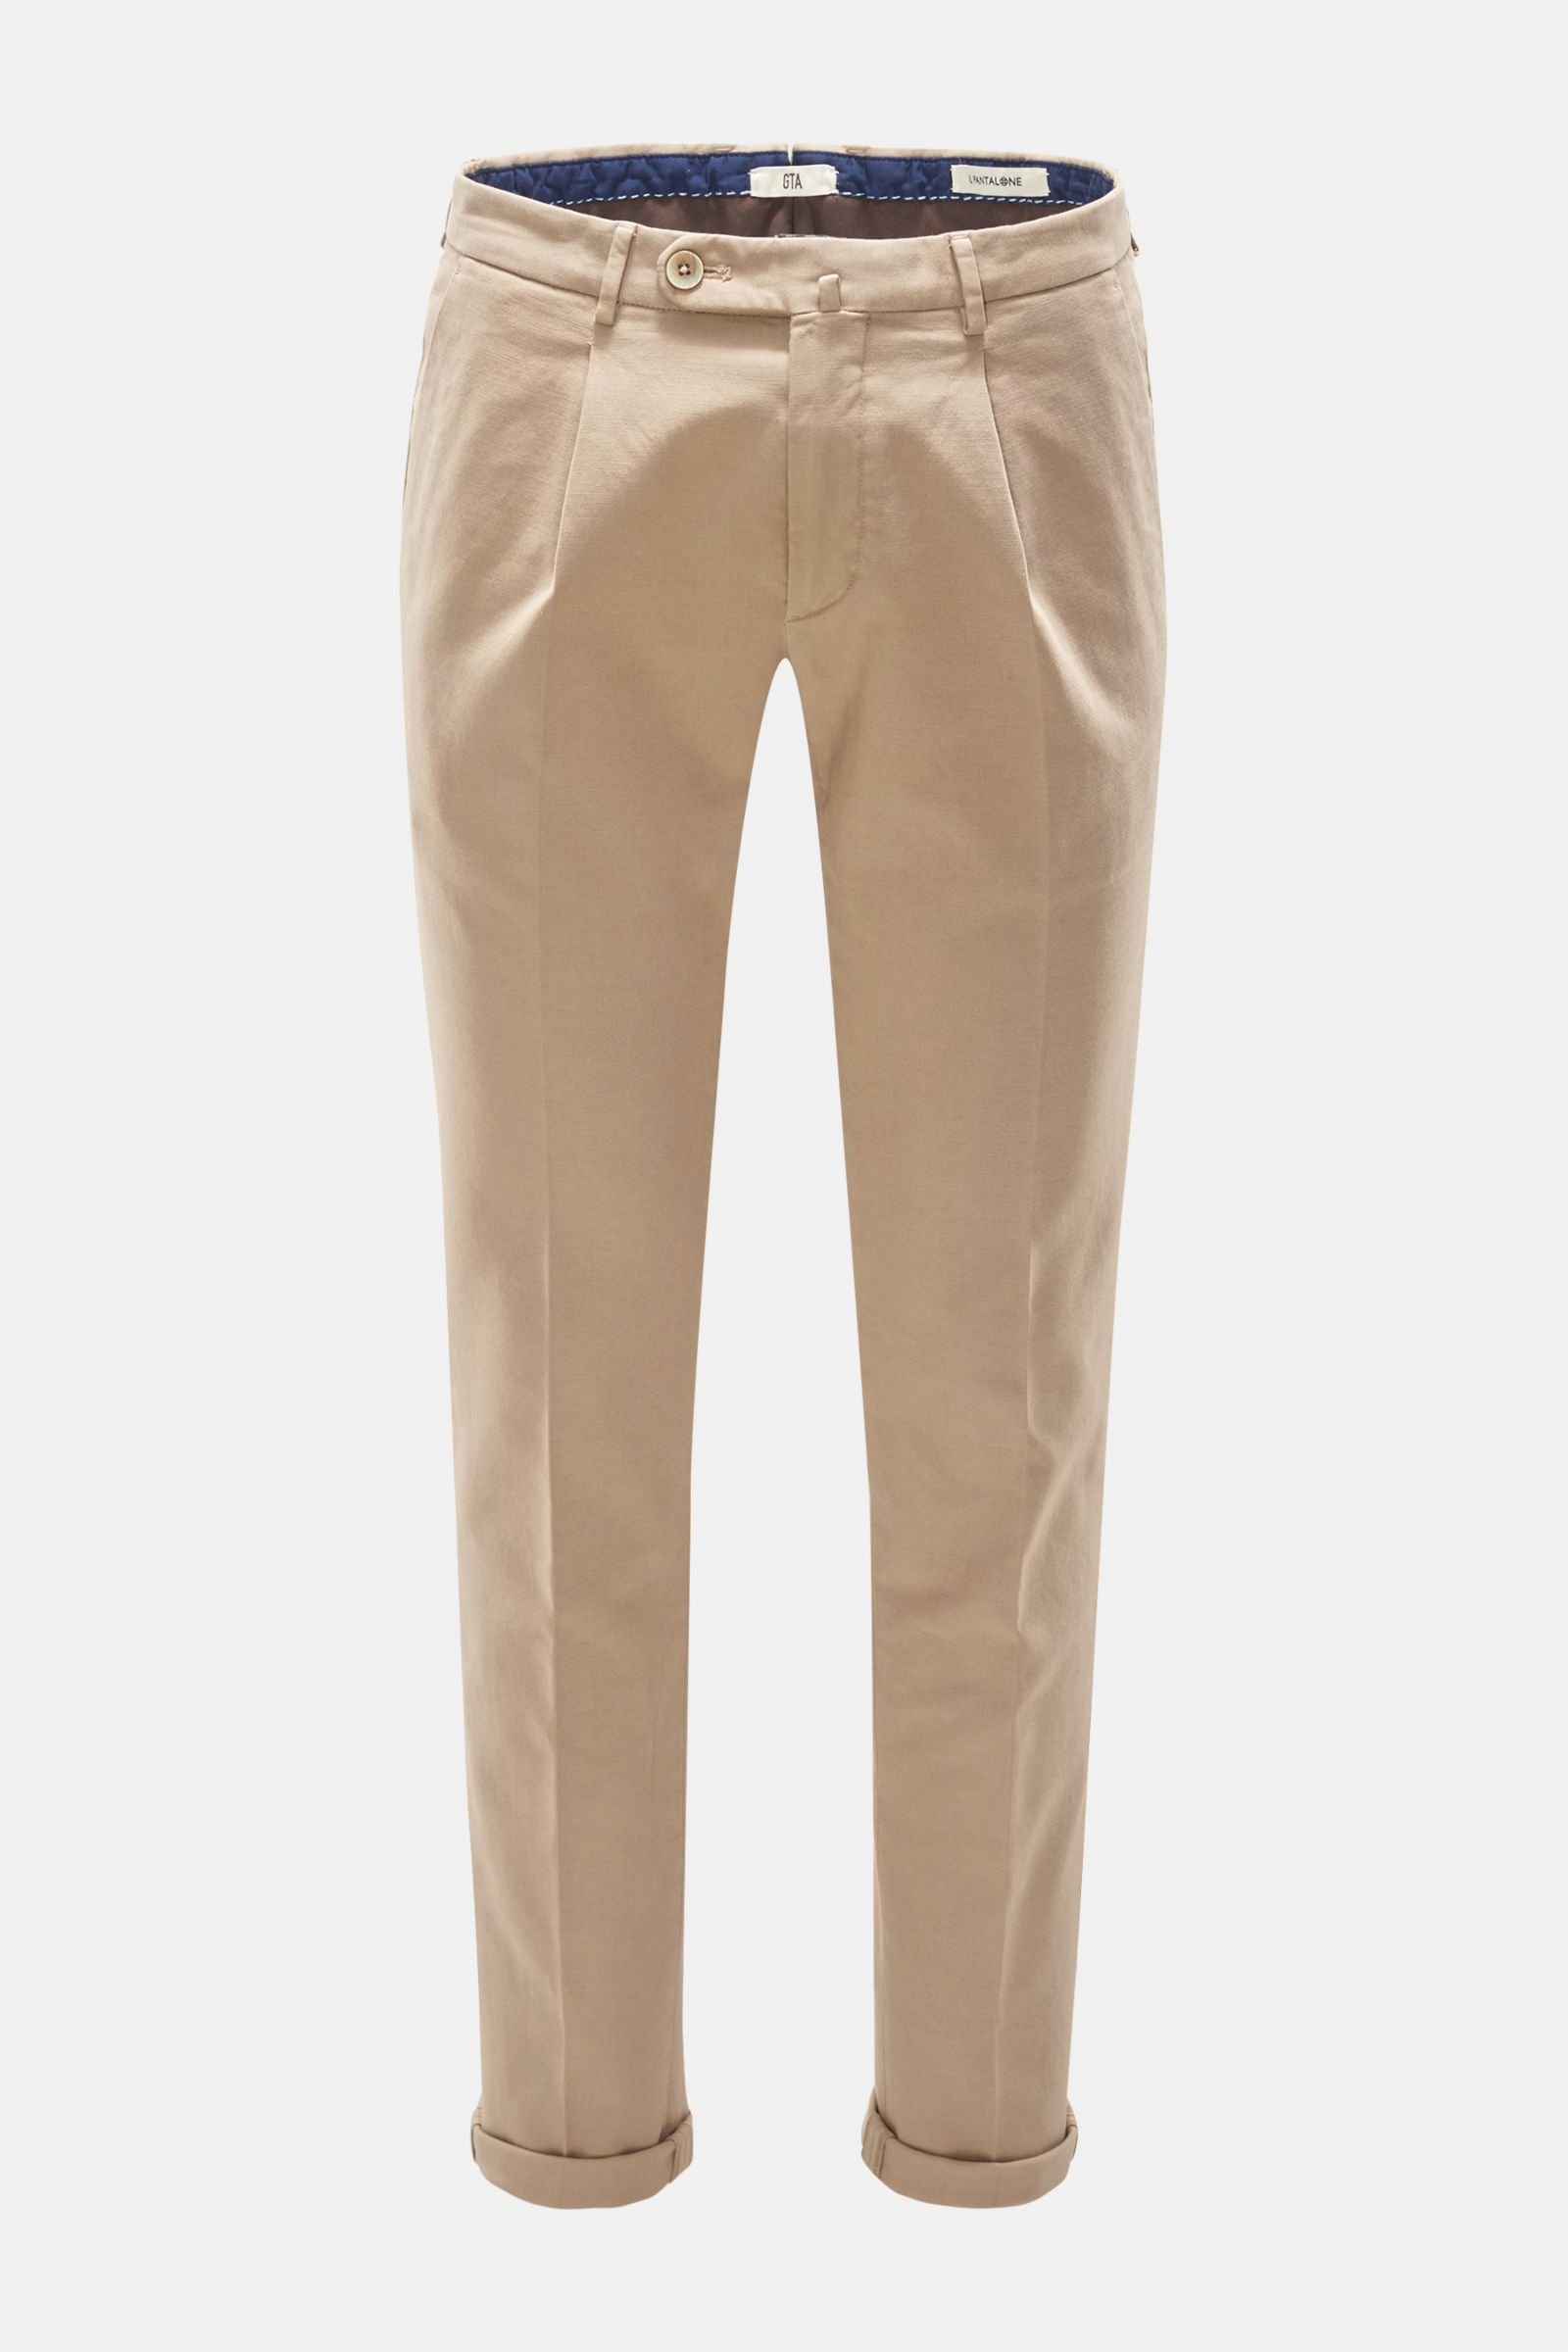 Cotton trousers 'Slim' beige